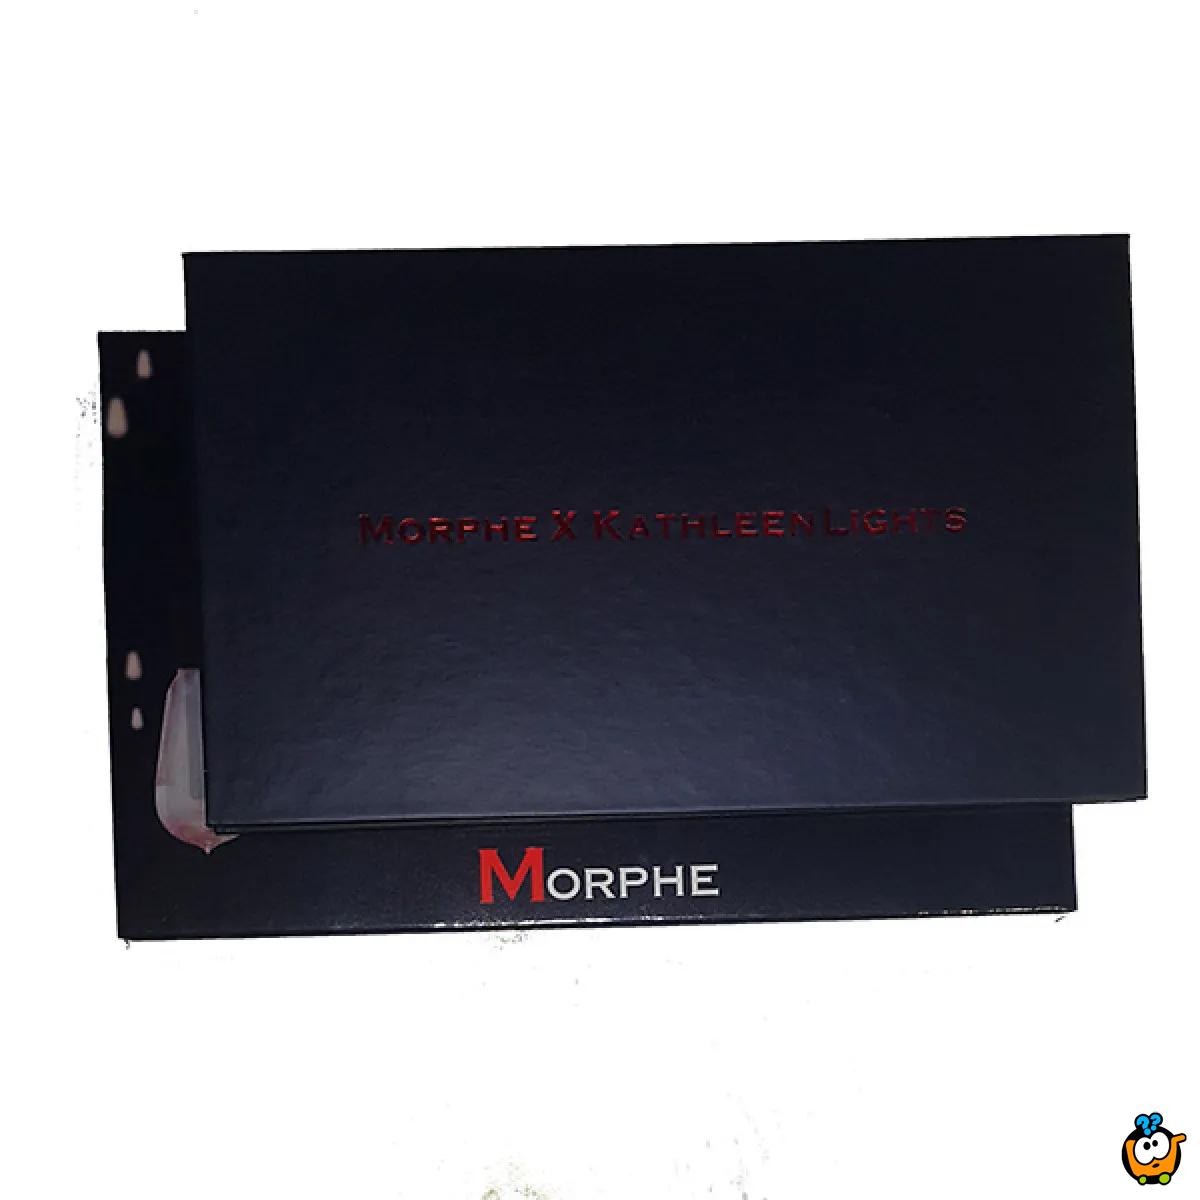 MORPHE - Profesionalna paleta od 15 nijansi senki